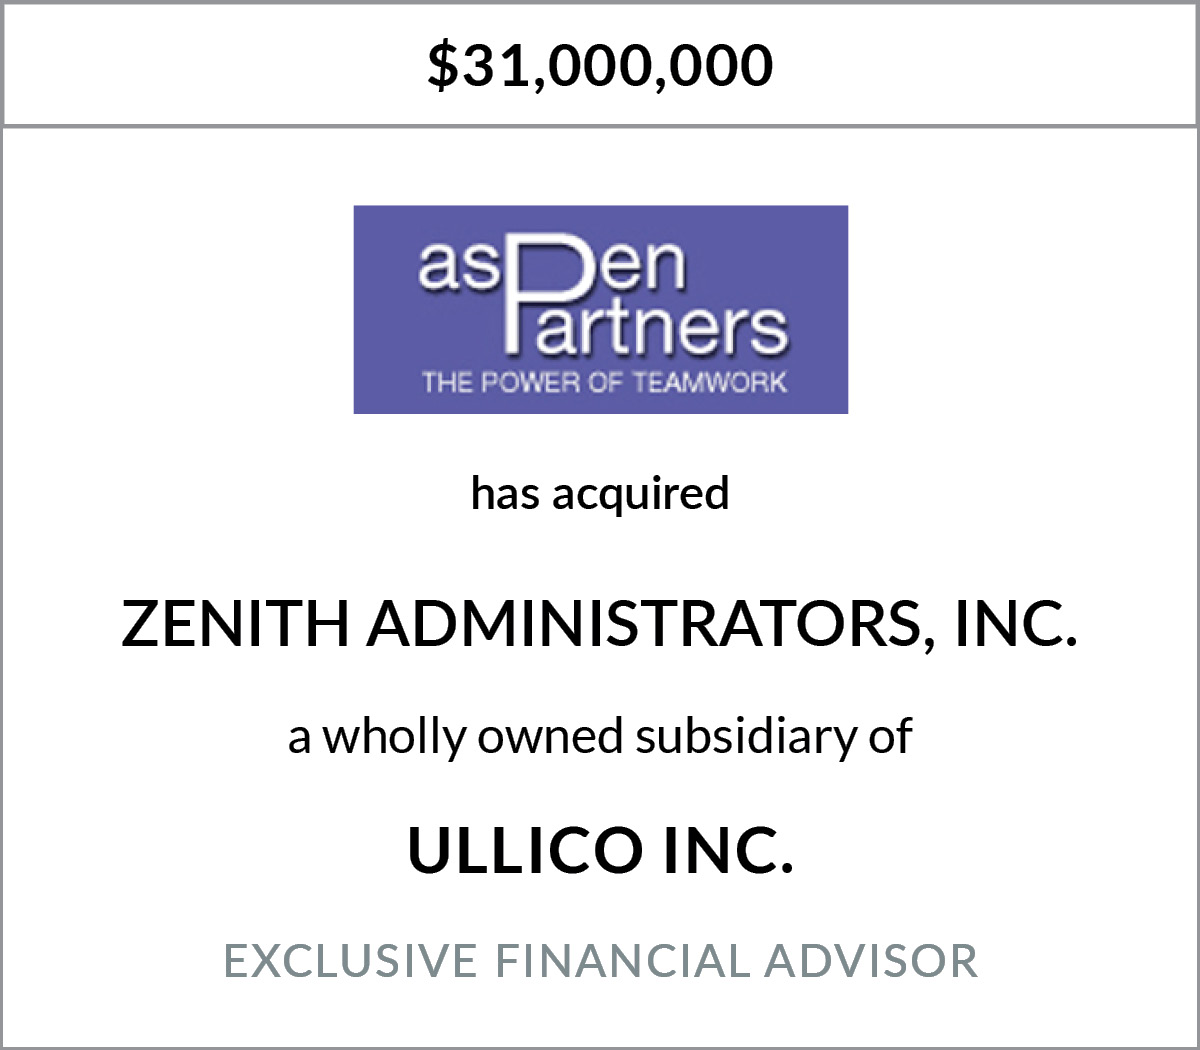 Aspen Partners LLC has acquired Zenith Administrators Inc.